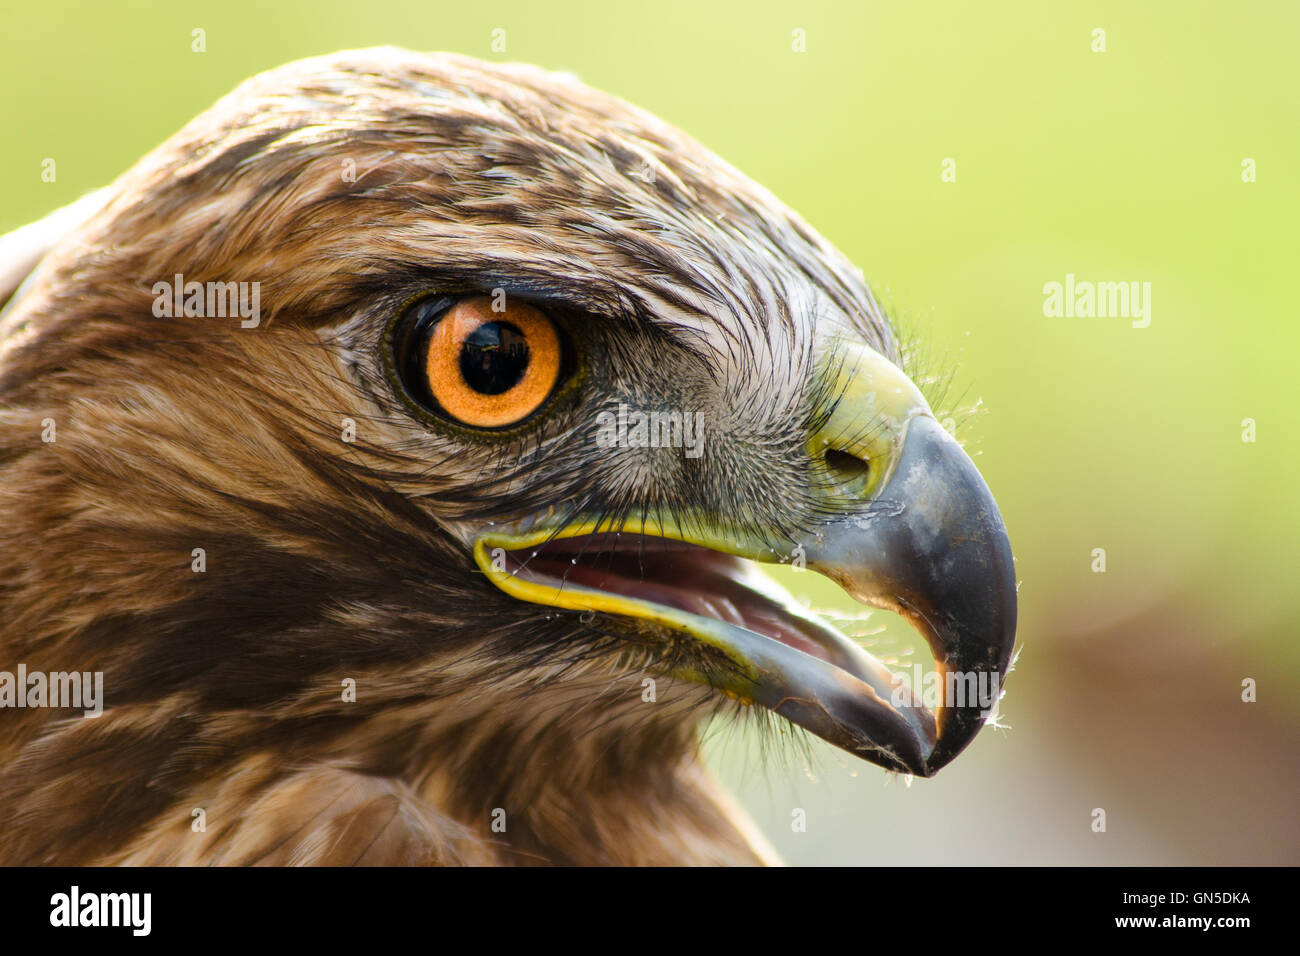 Un close-up de Eagle con grandes ojos naranja Foto de stock